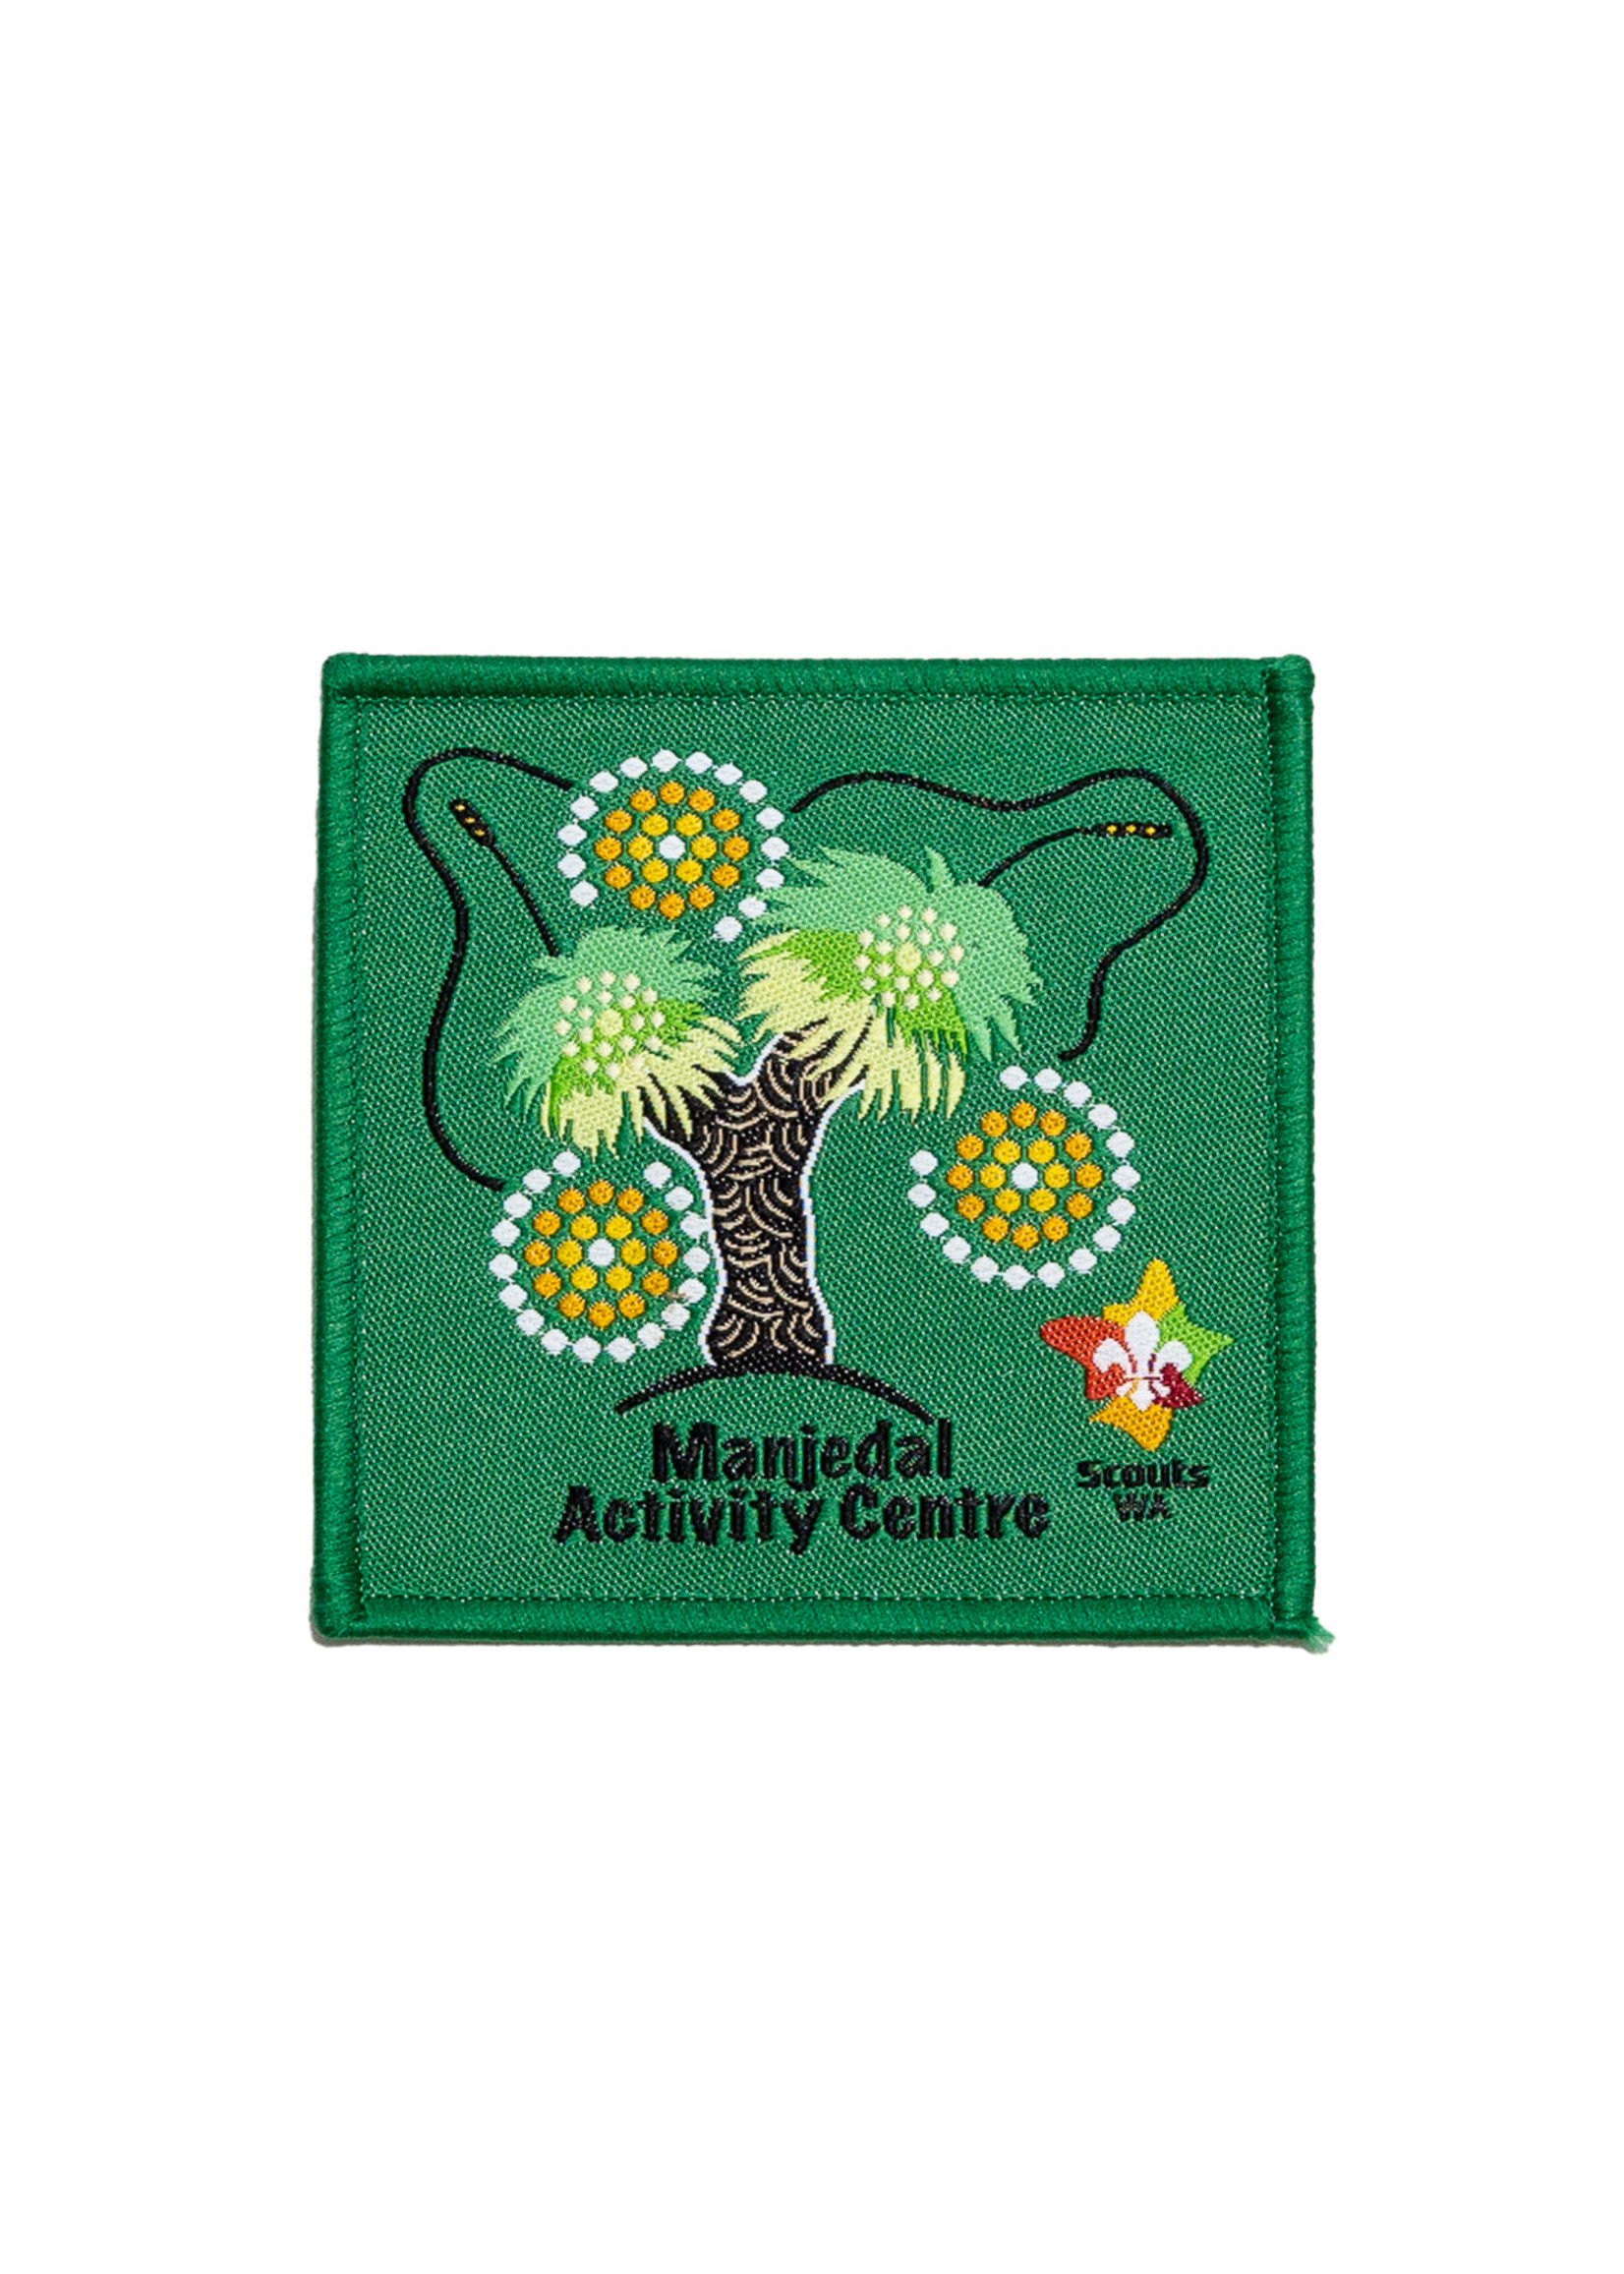 Manjedal Activity Centre Aboriginal Badges - Grass Tree (Balga) - Green